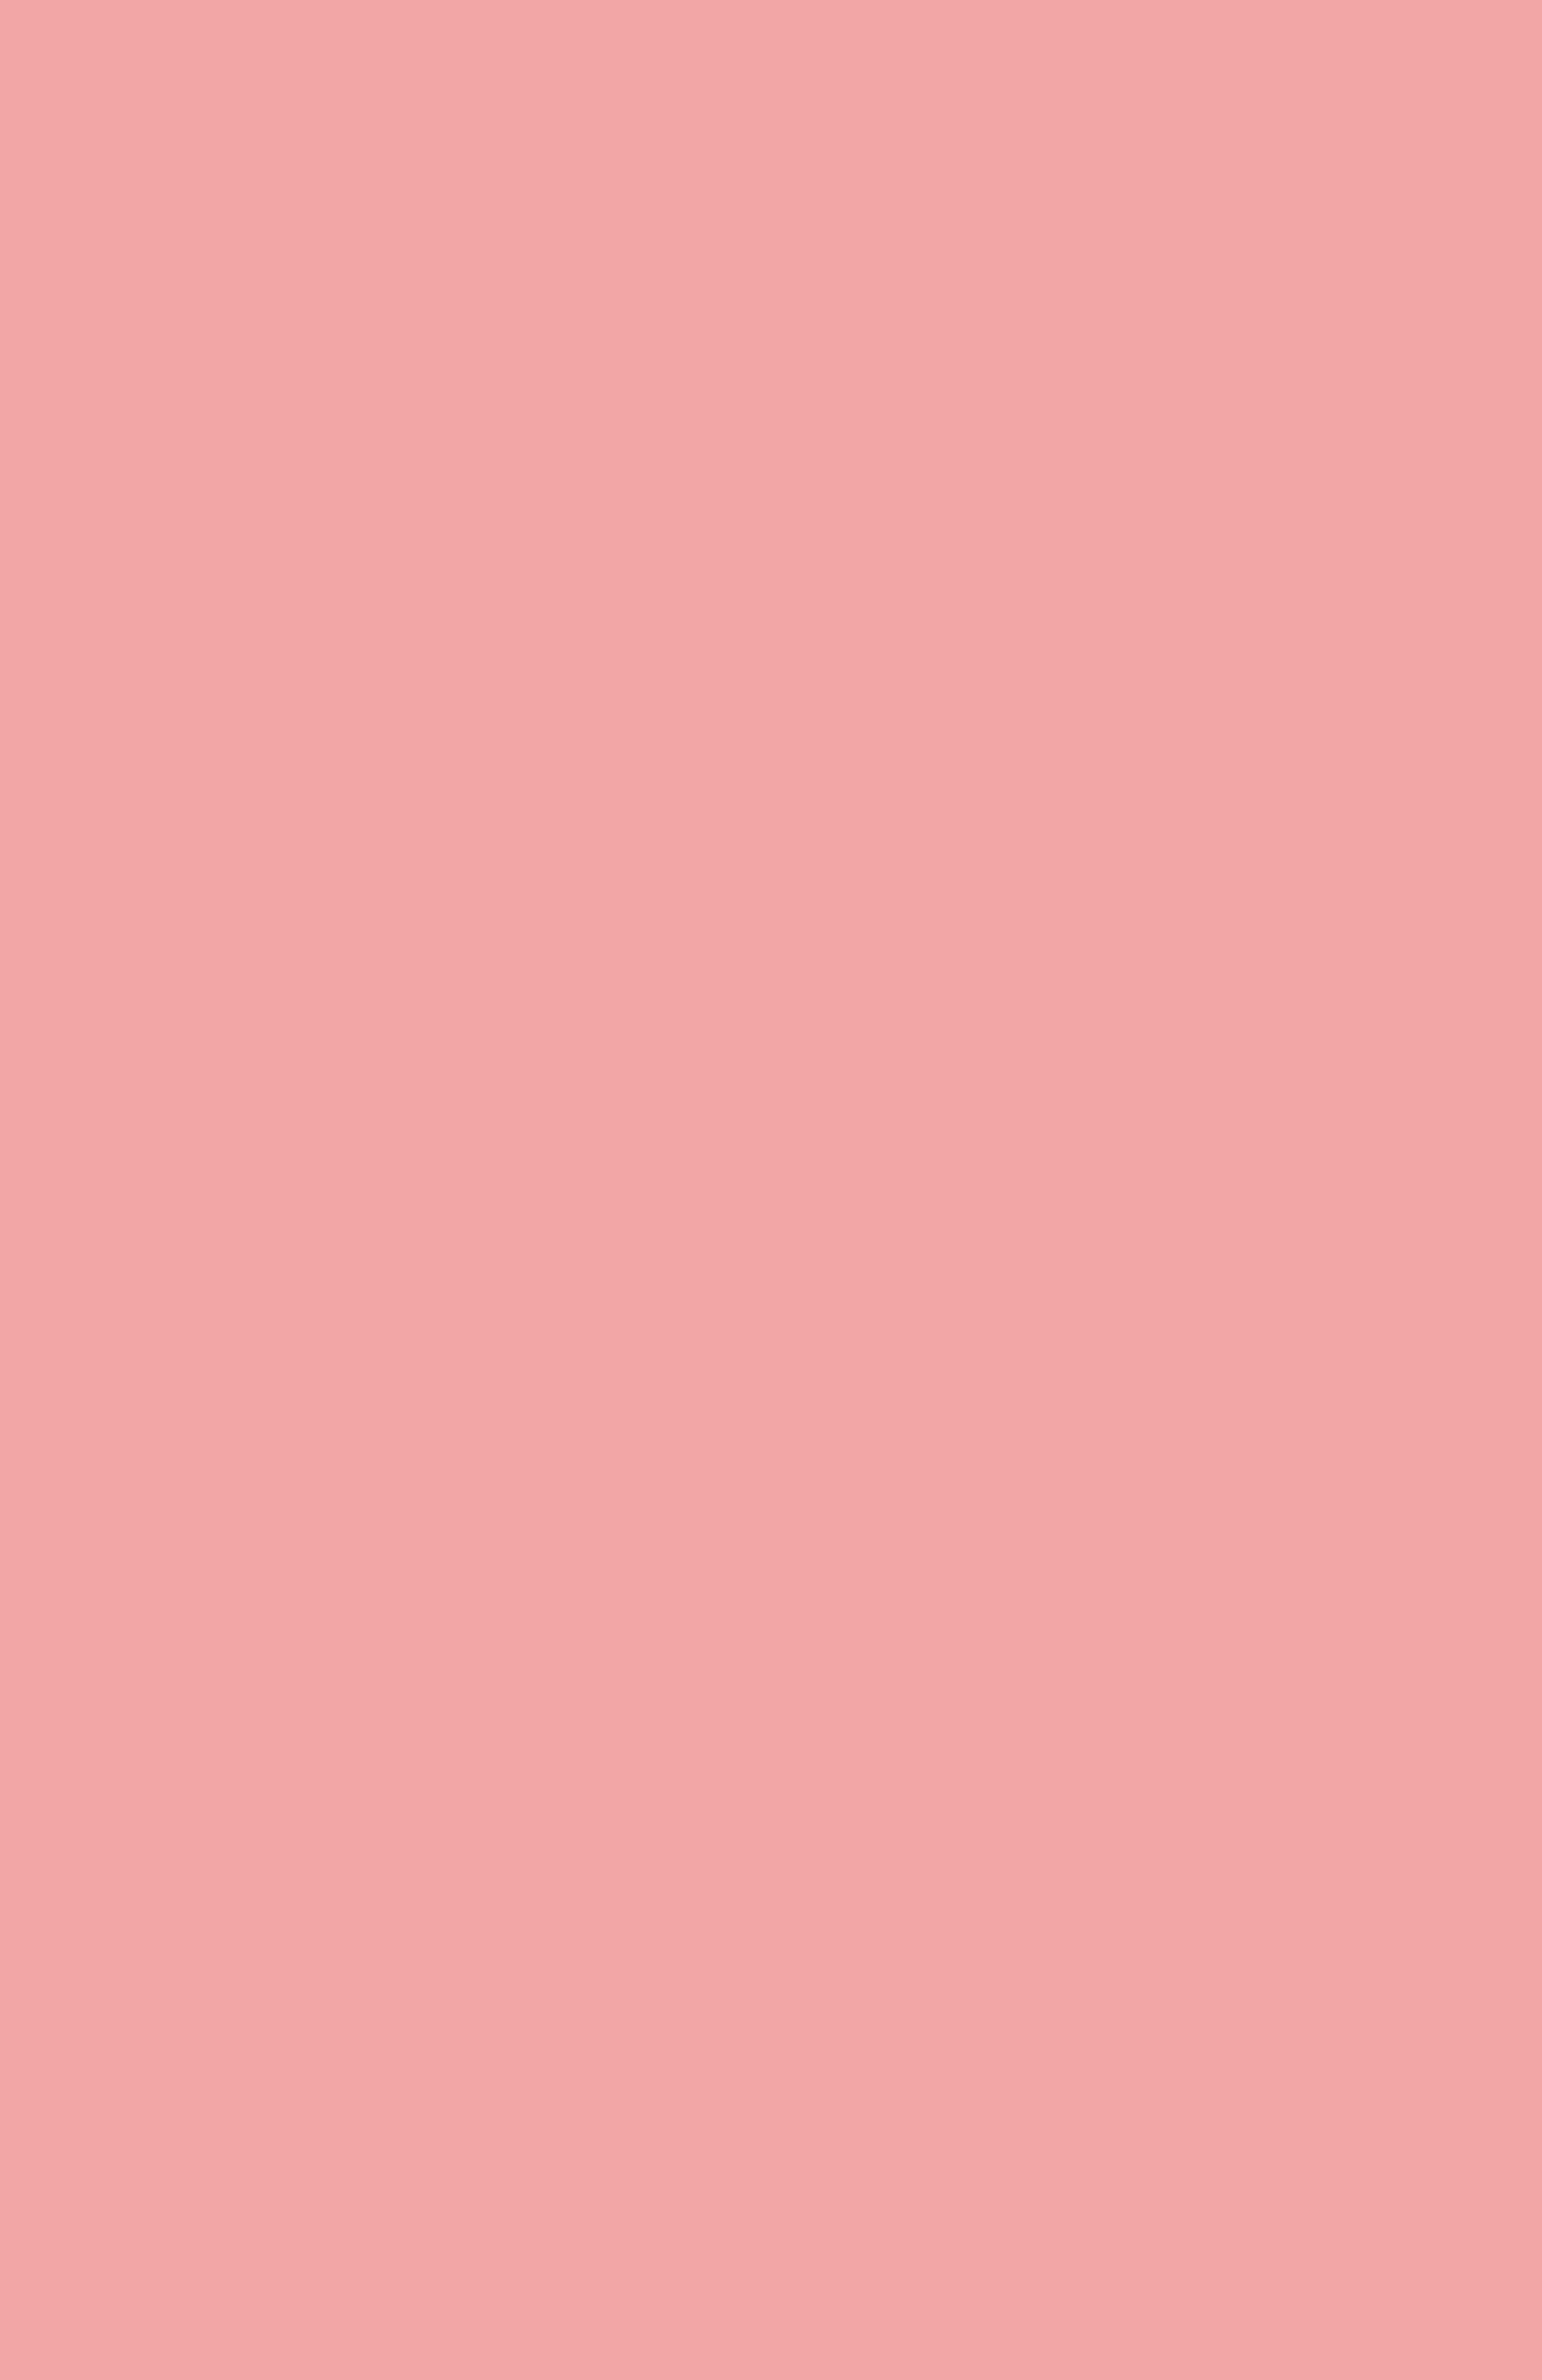 Placeholder Pink